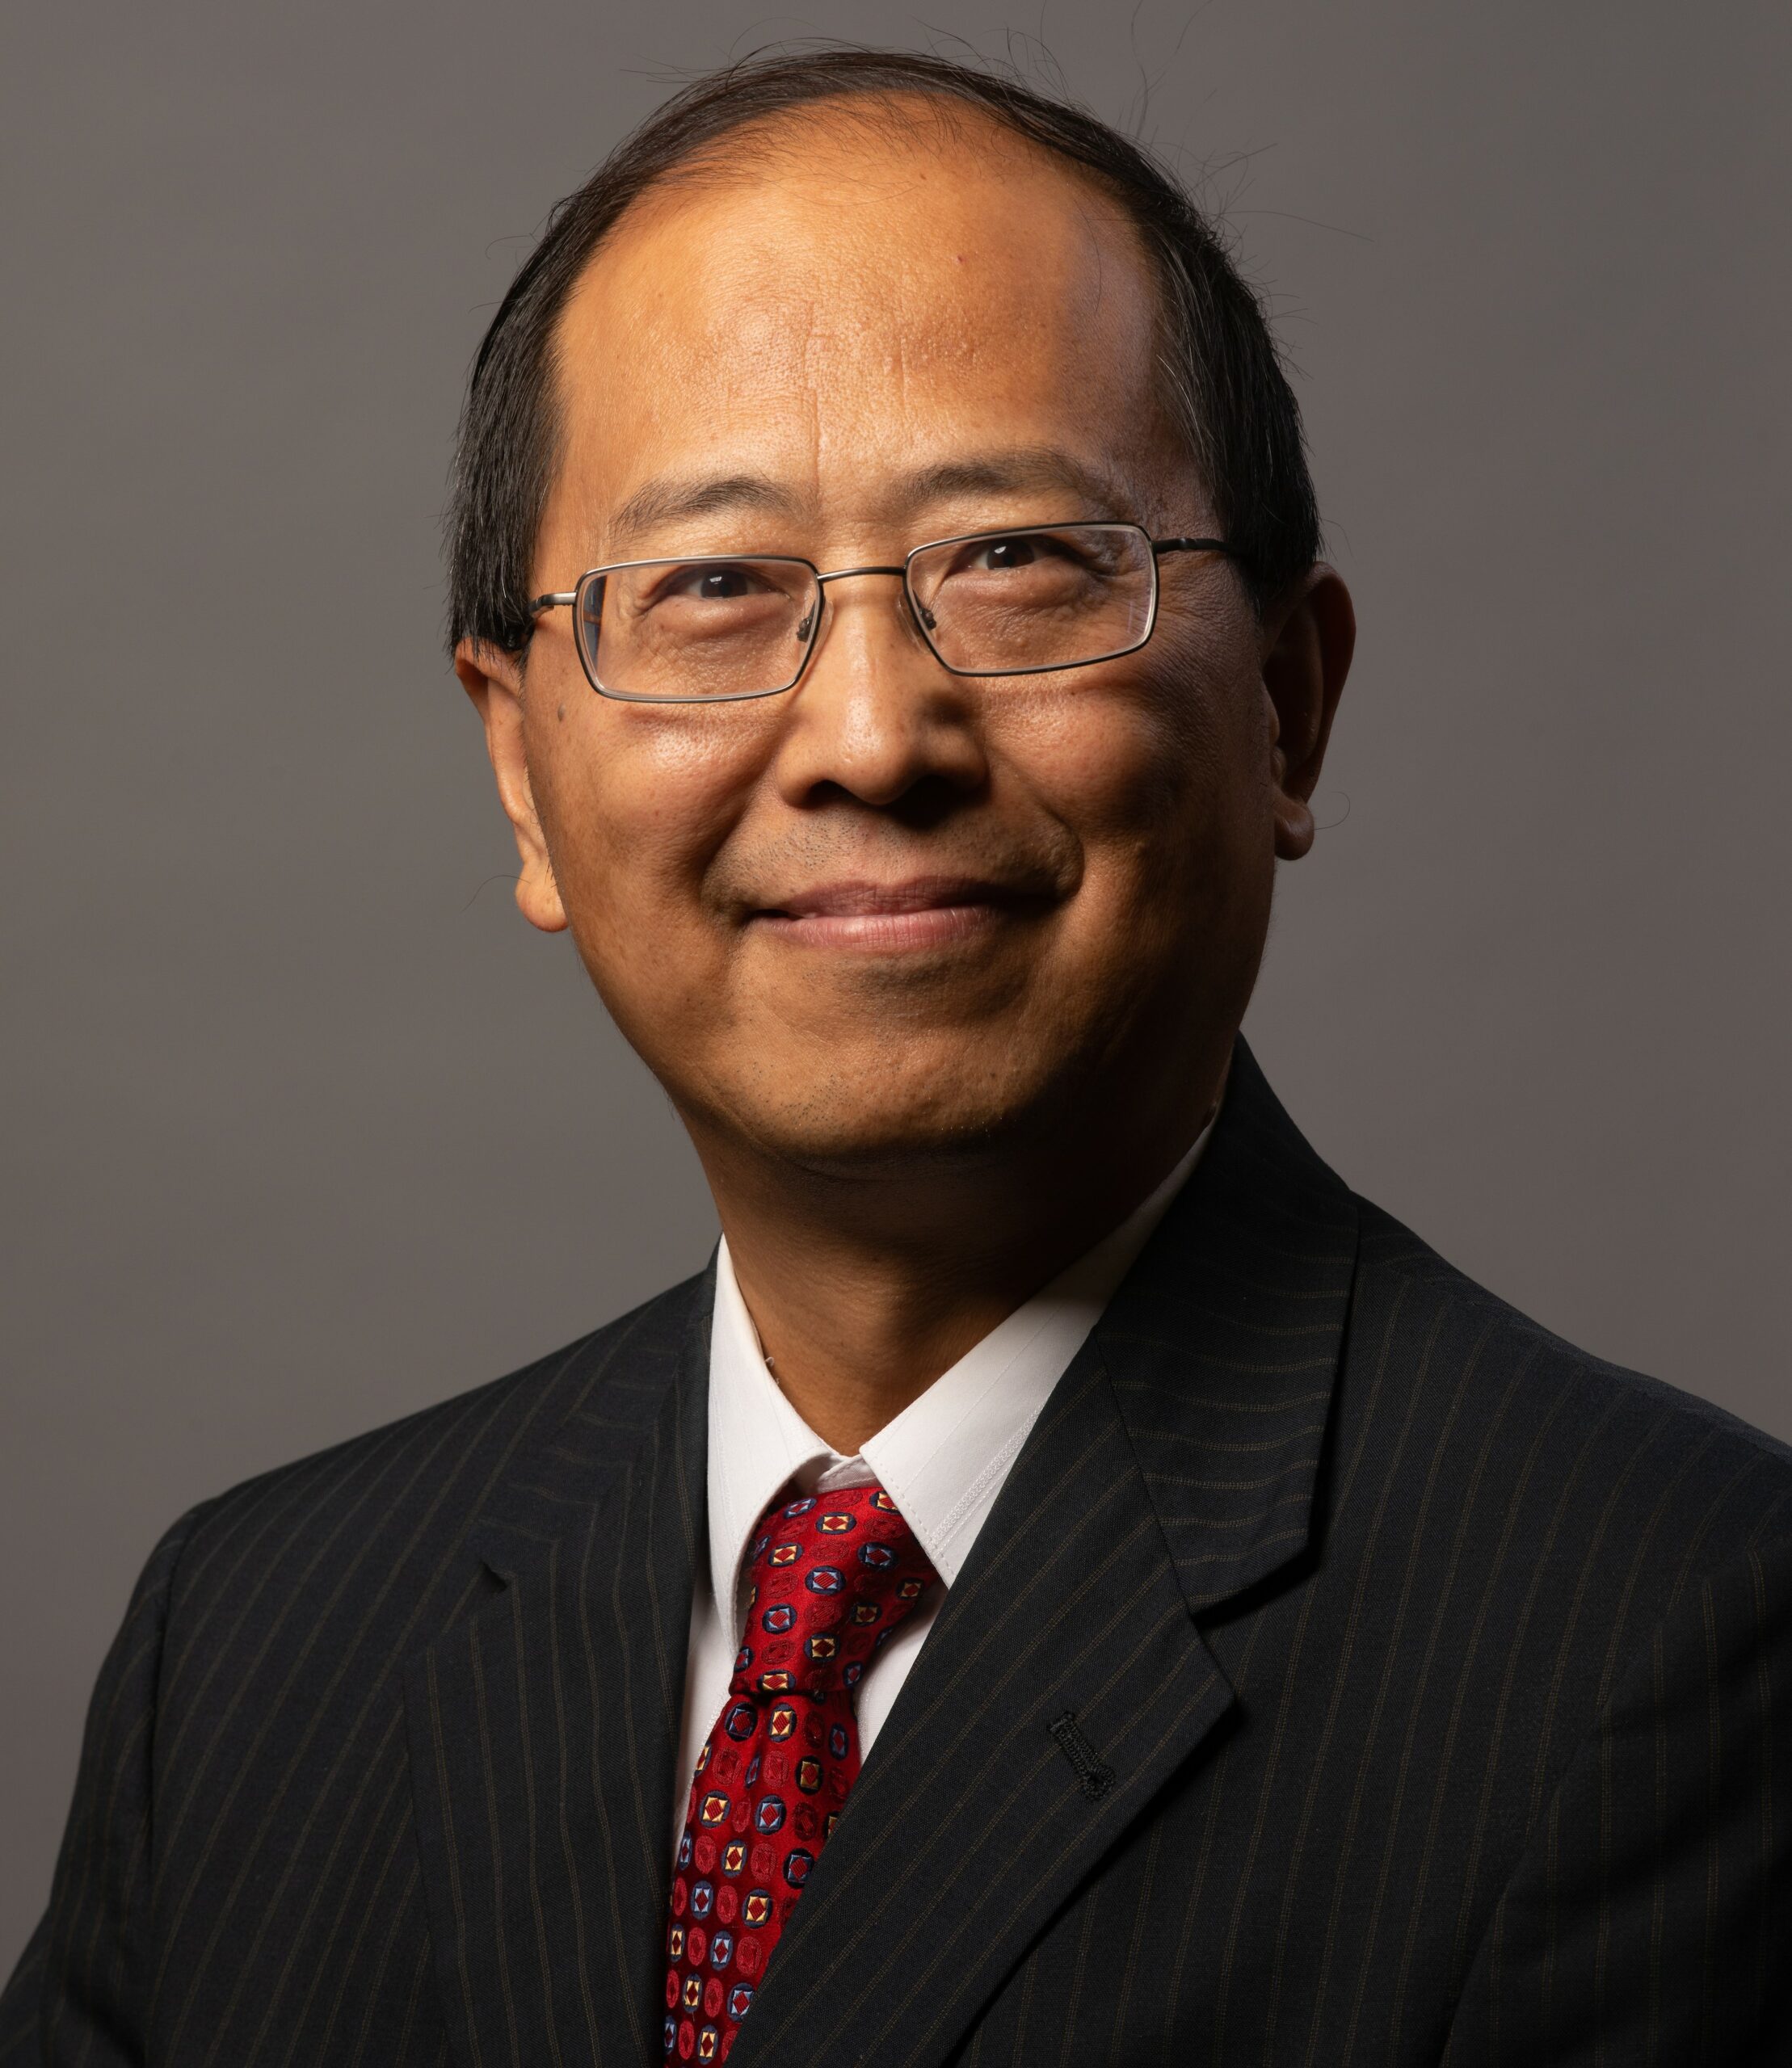 Bob Hu